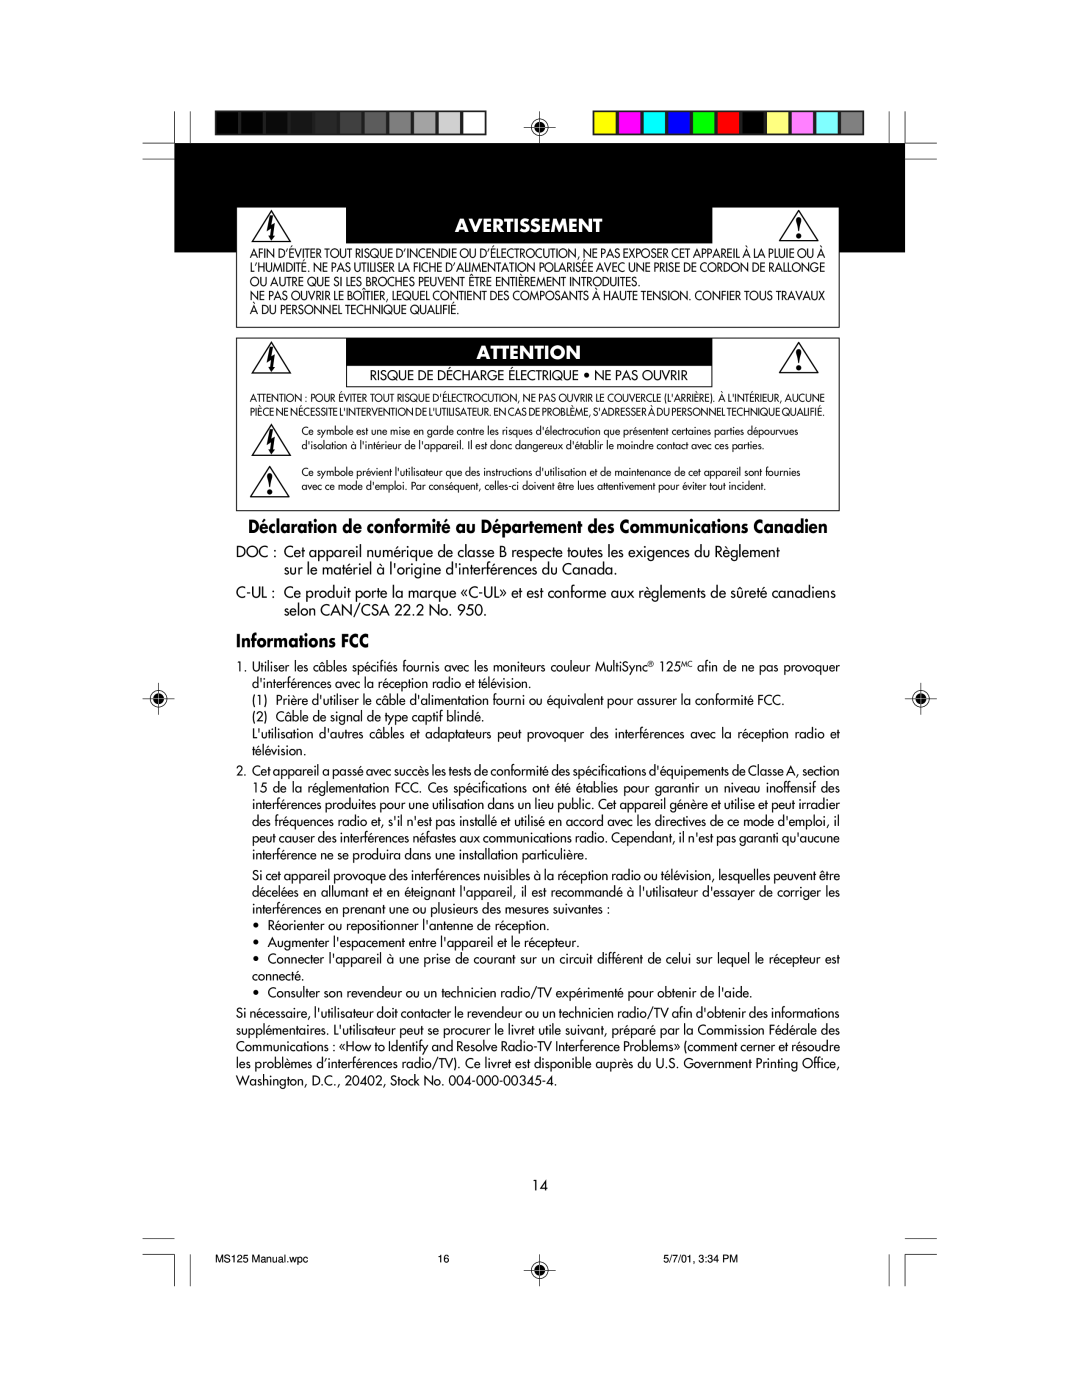 NEC MS125 manual Avertissement, Informations FCC 